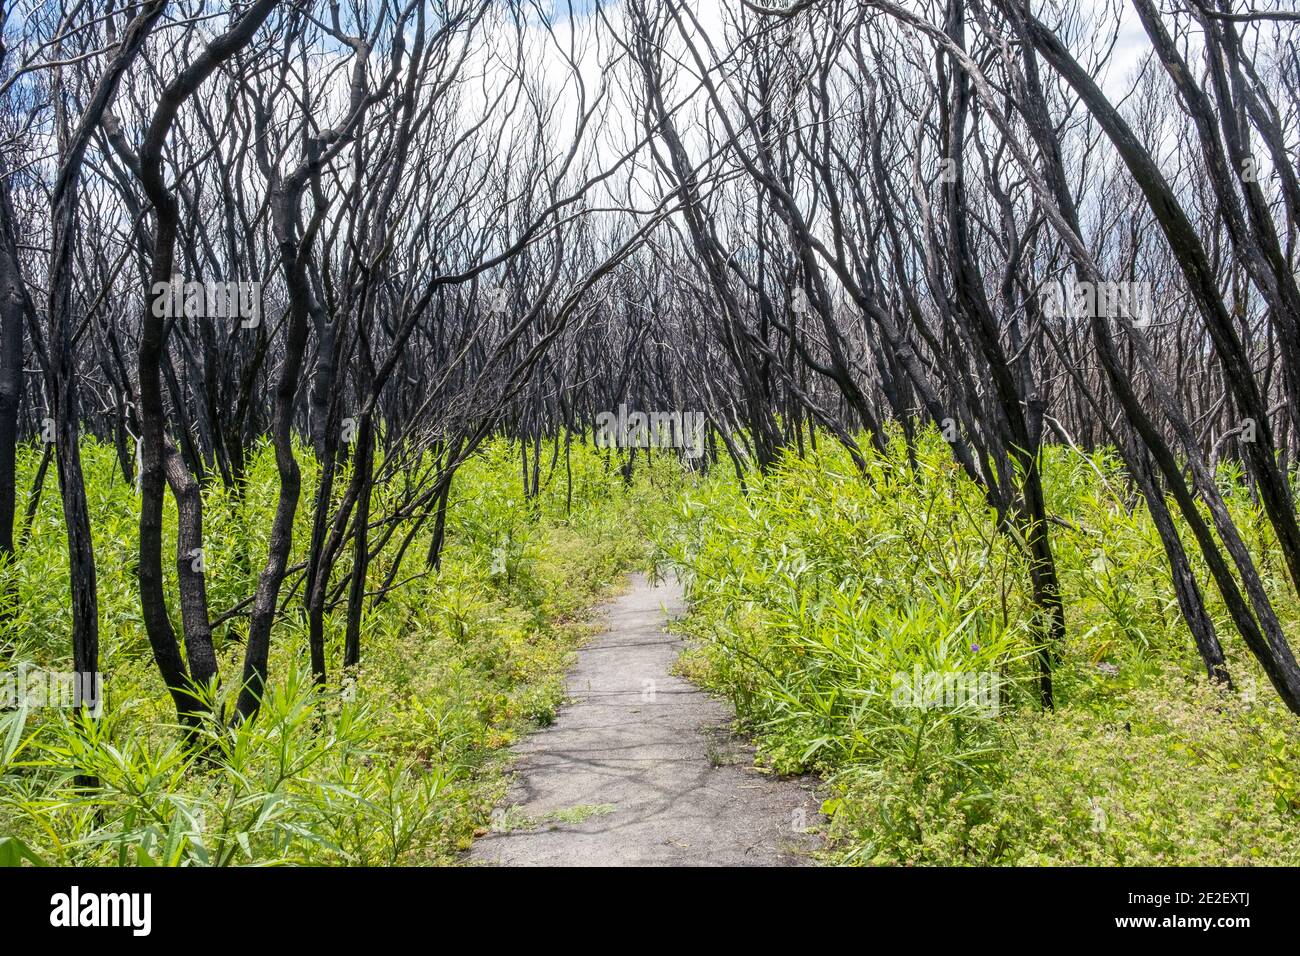 Walkway through burned bush with fresh green growth in Australia Stock Photo